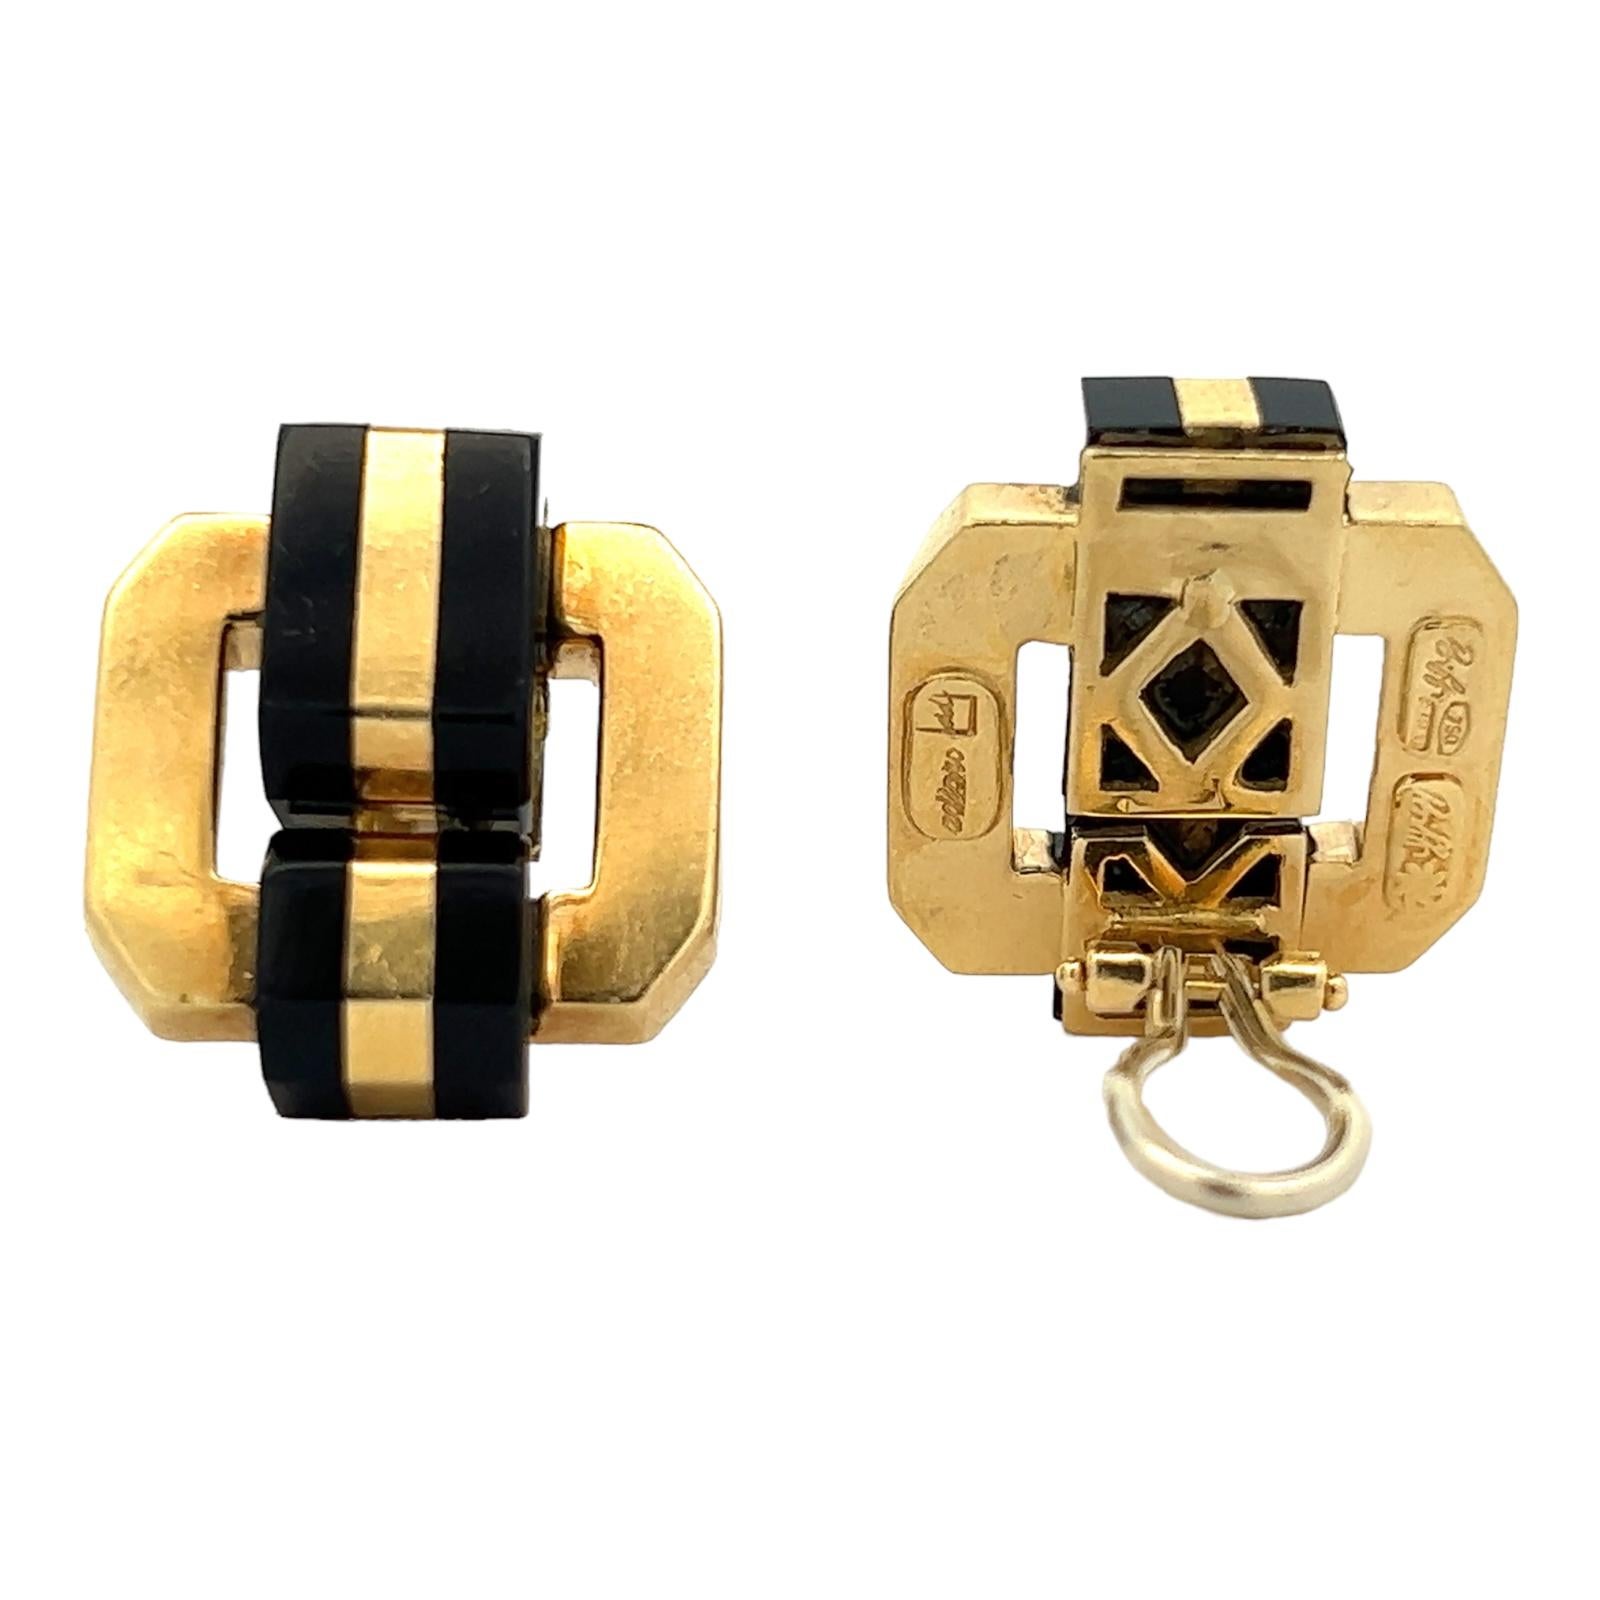 Contemporary Italian Onyx 18 Karat Yellow Gold Square Earclip Earrings Signed Biff & Adloro